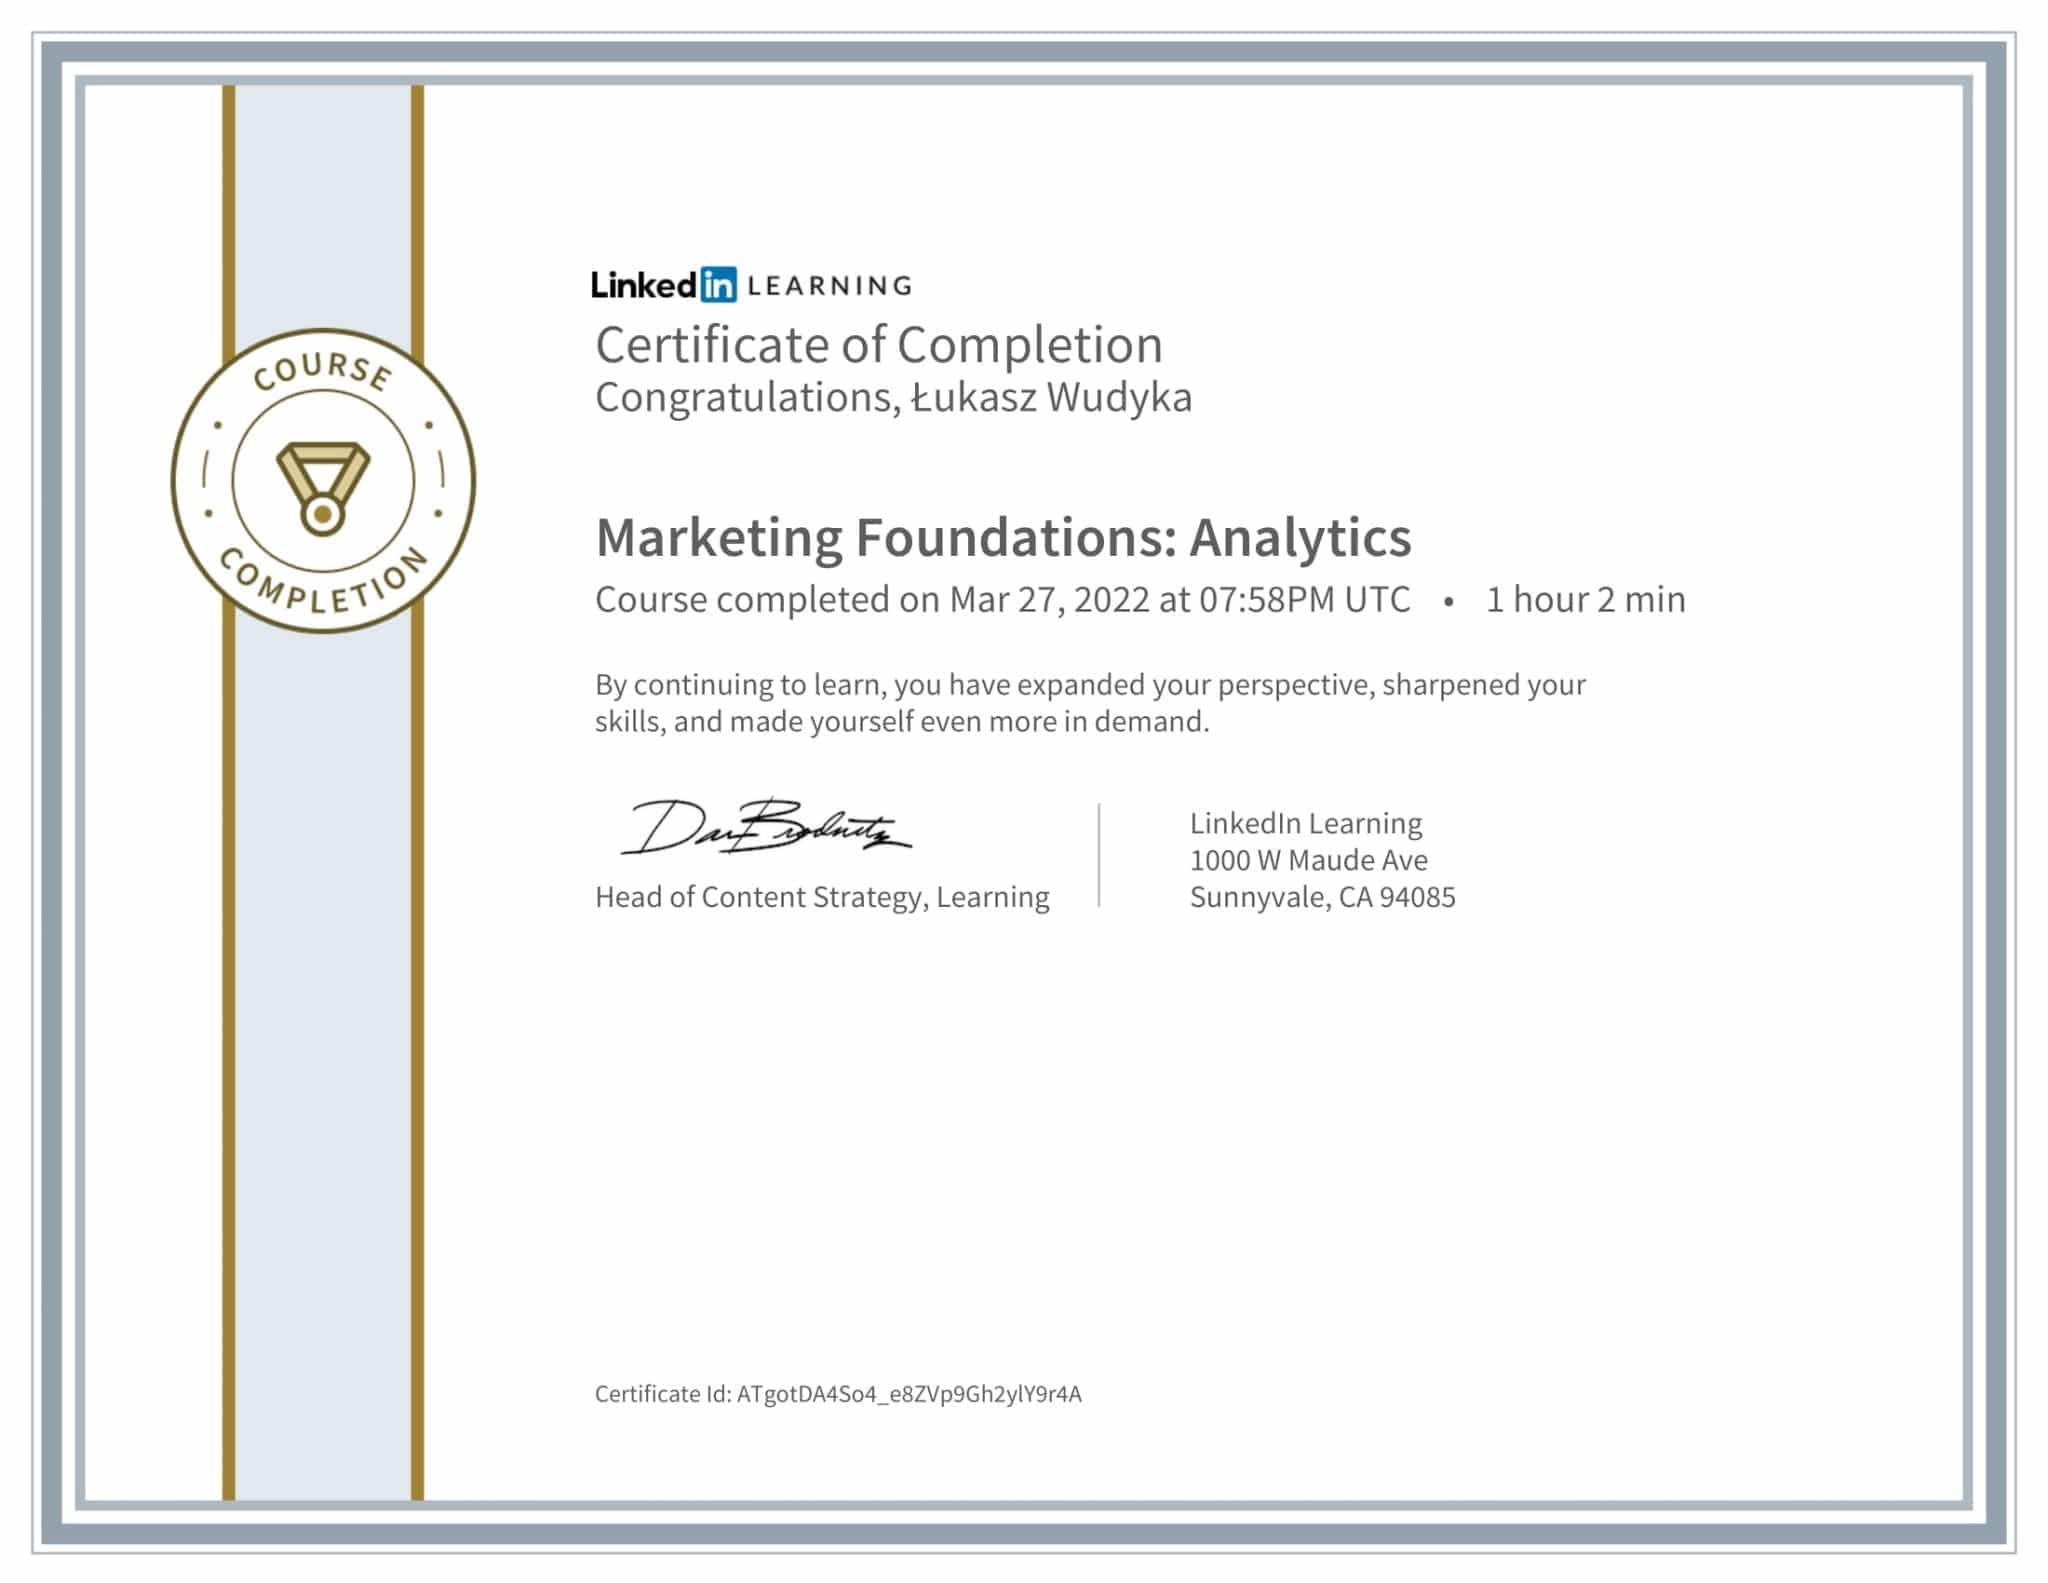 CertificateOfCompletion_Marketing Foundations Analytics-1